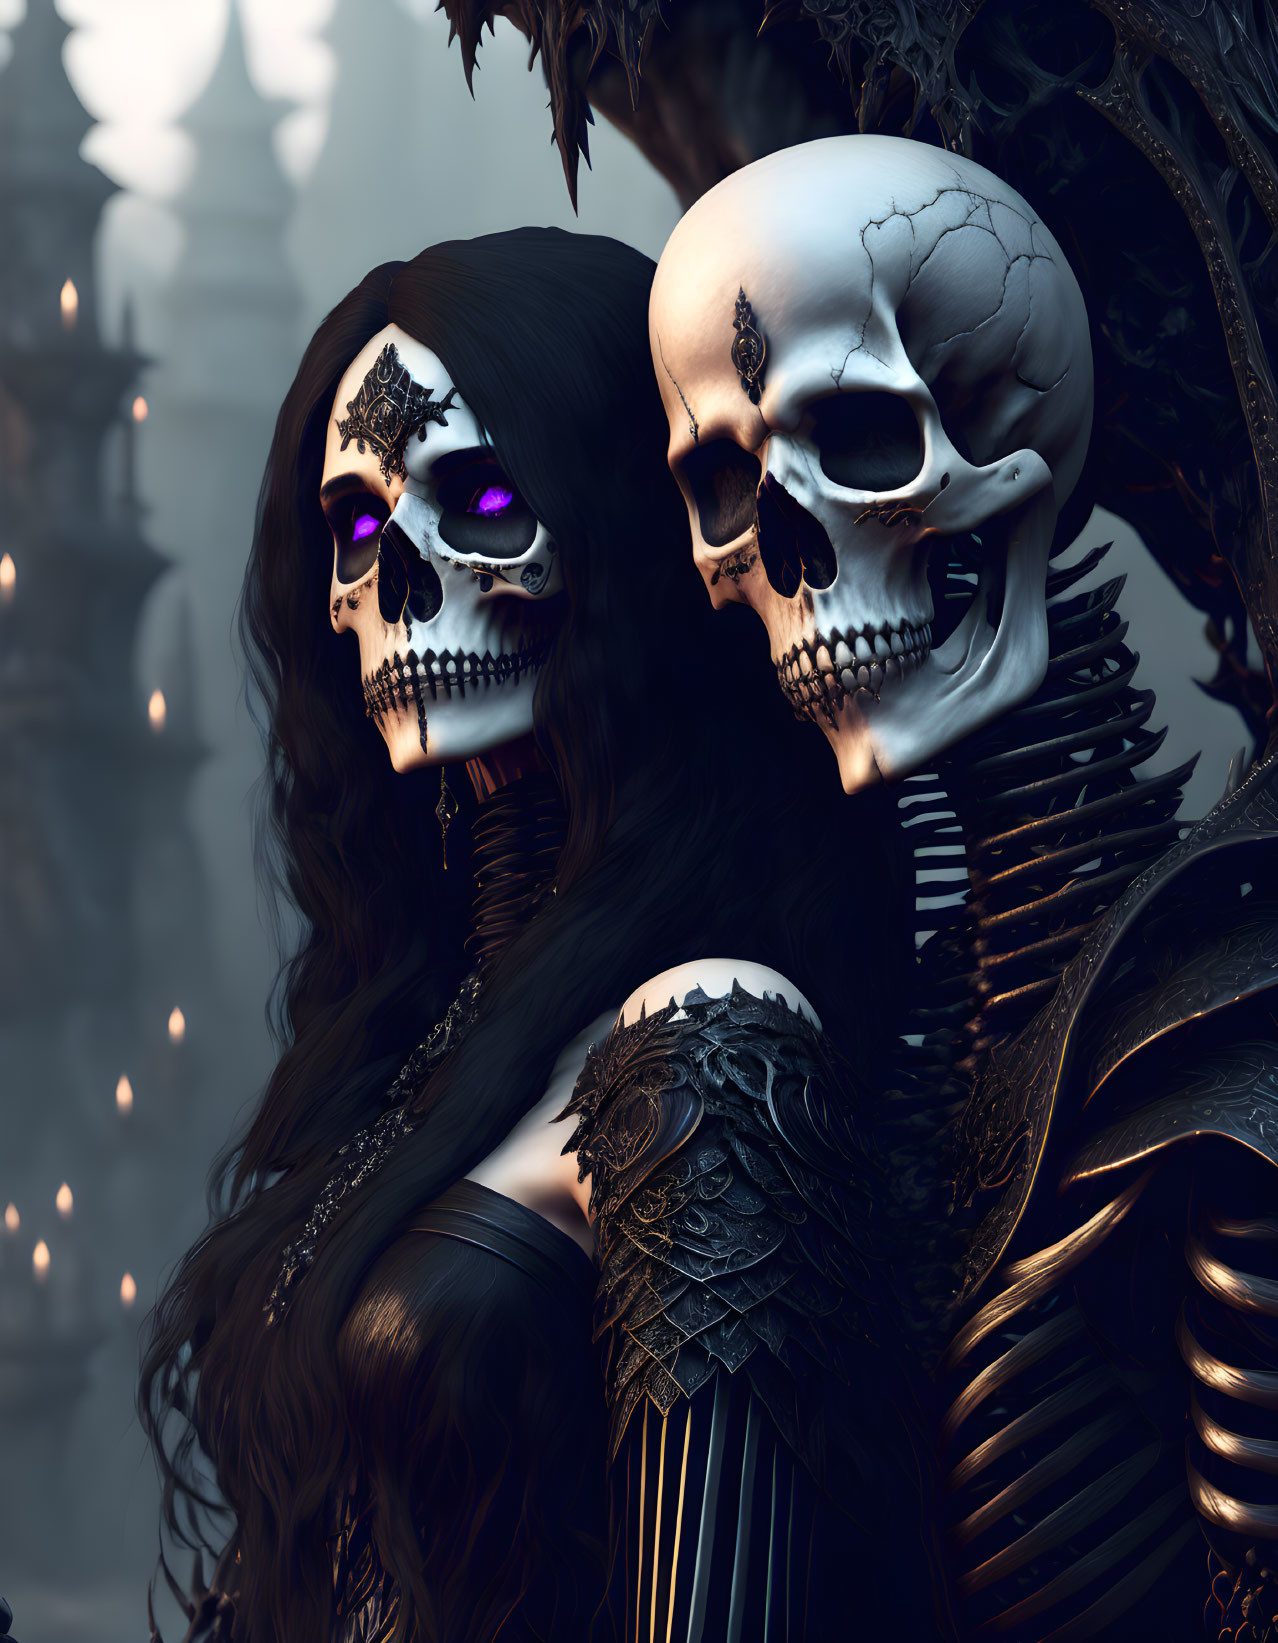 Detailed skull makeup on skeletons in dark attire against candle-filled backdrop